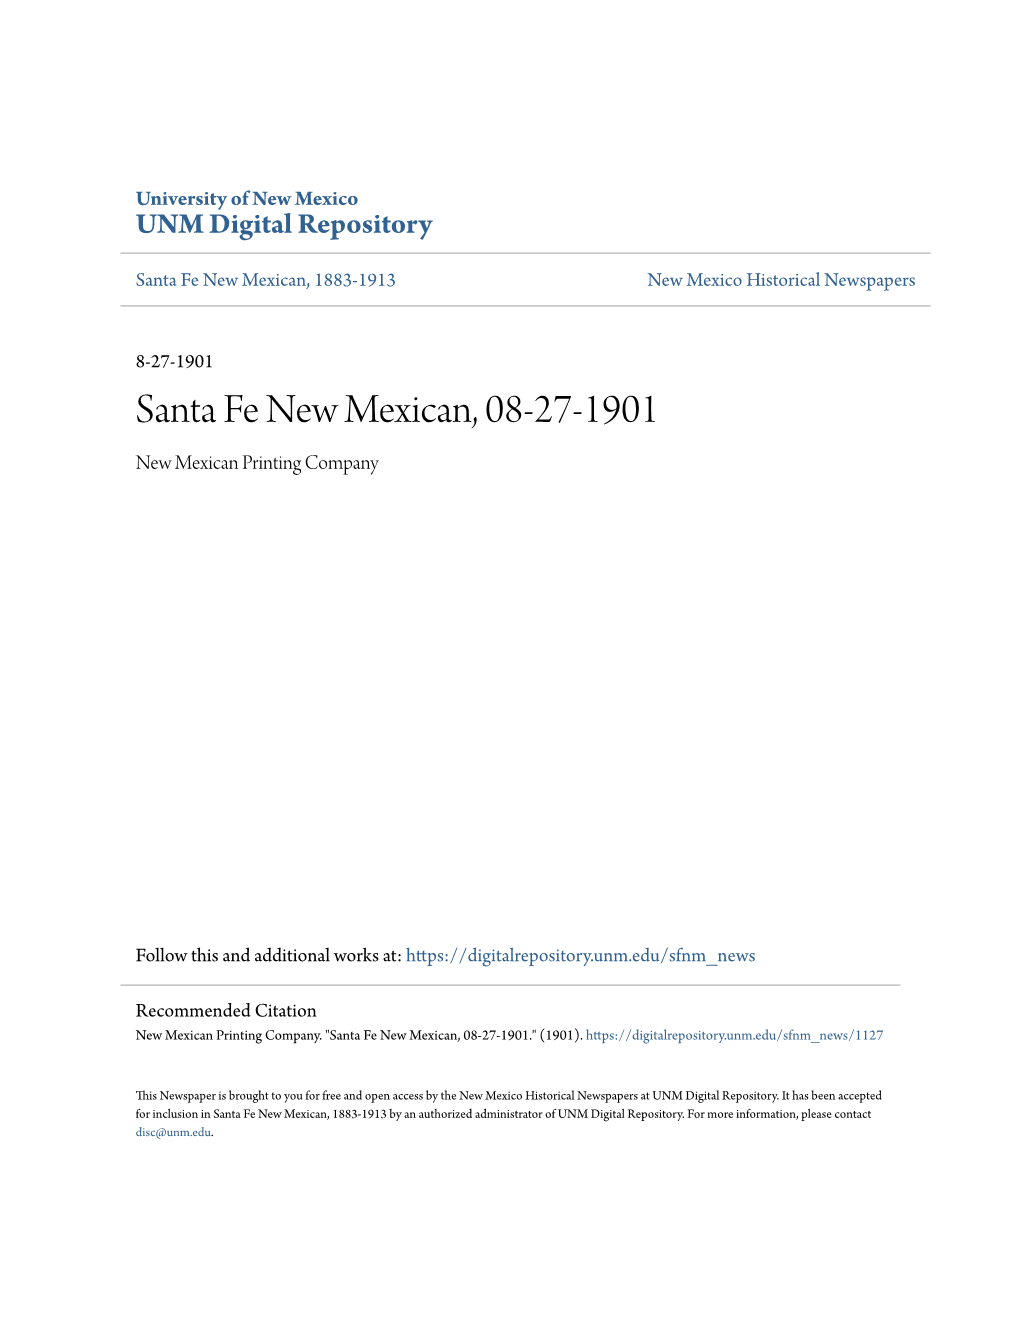 Santa Fe New Mexican, 08-27-1901 New Mexican Printing Company